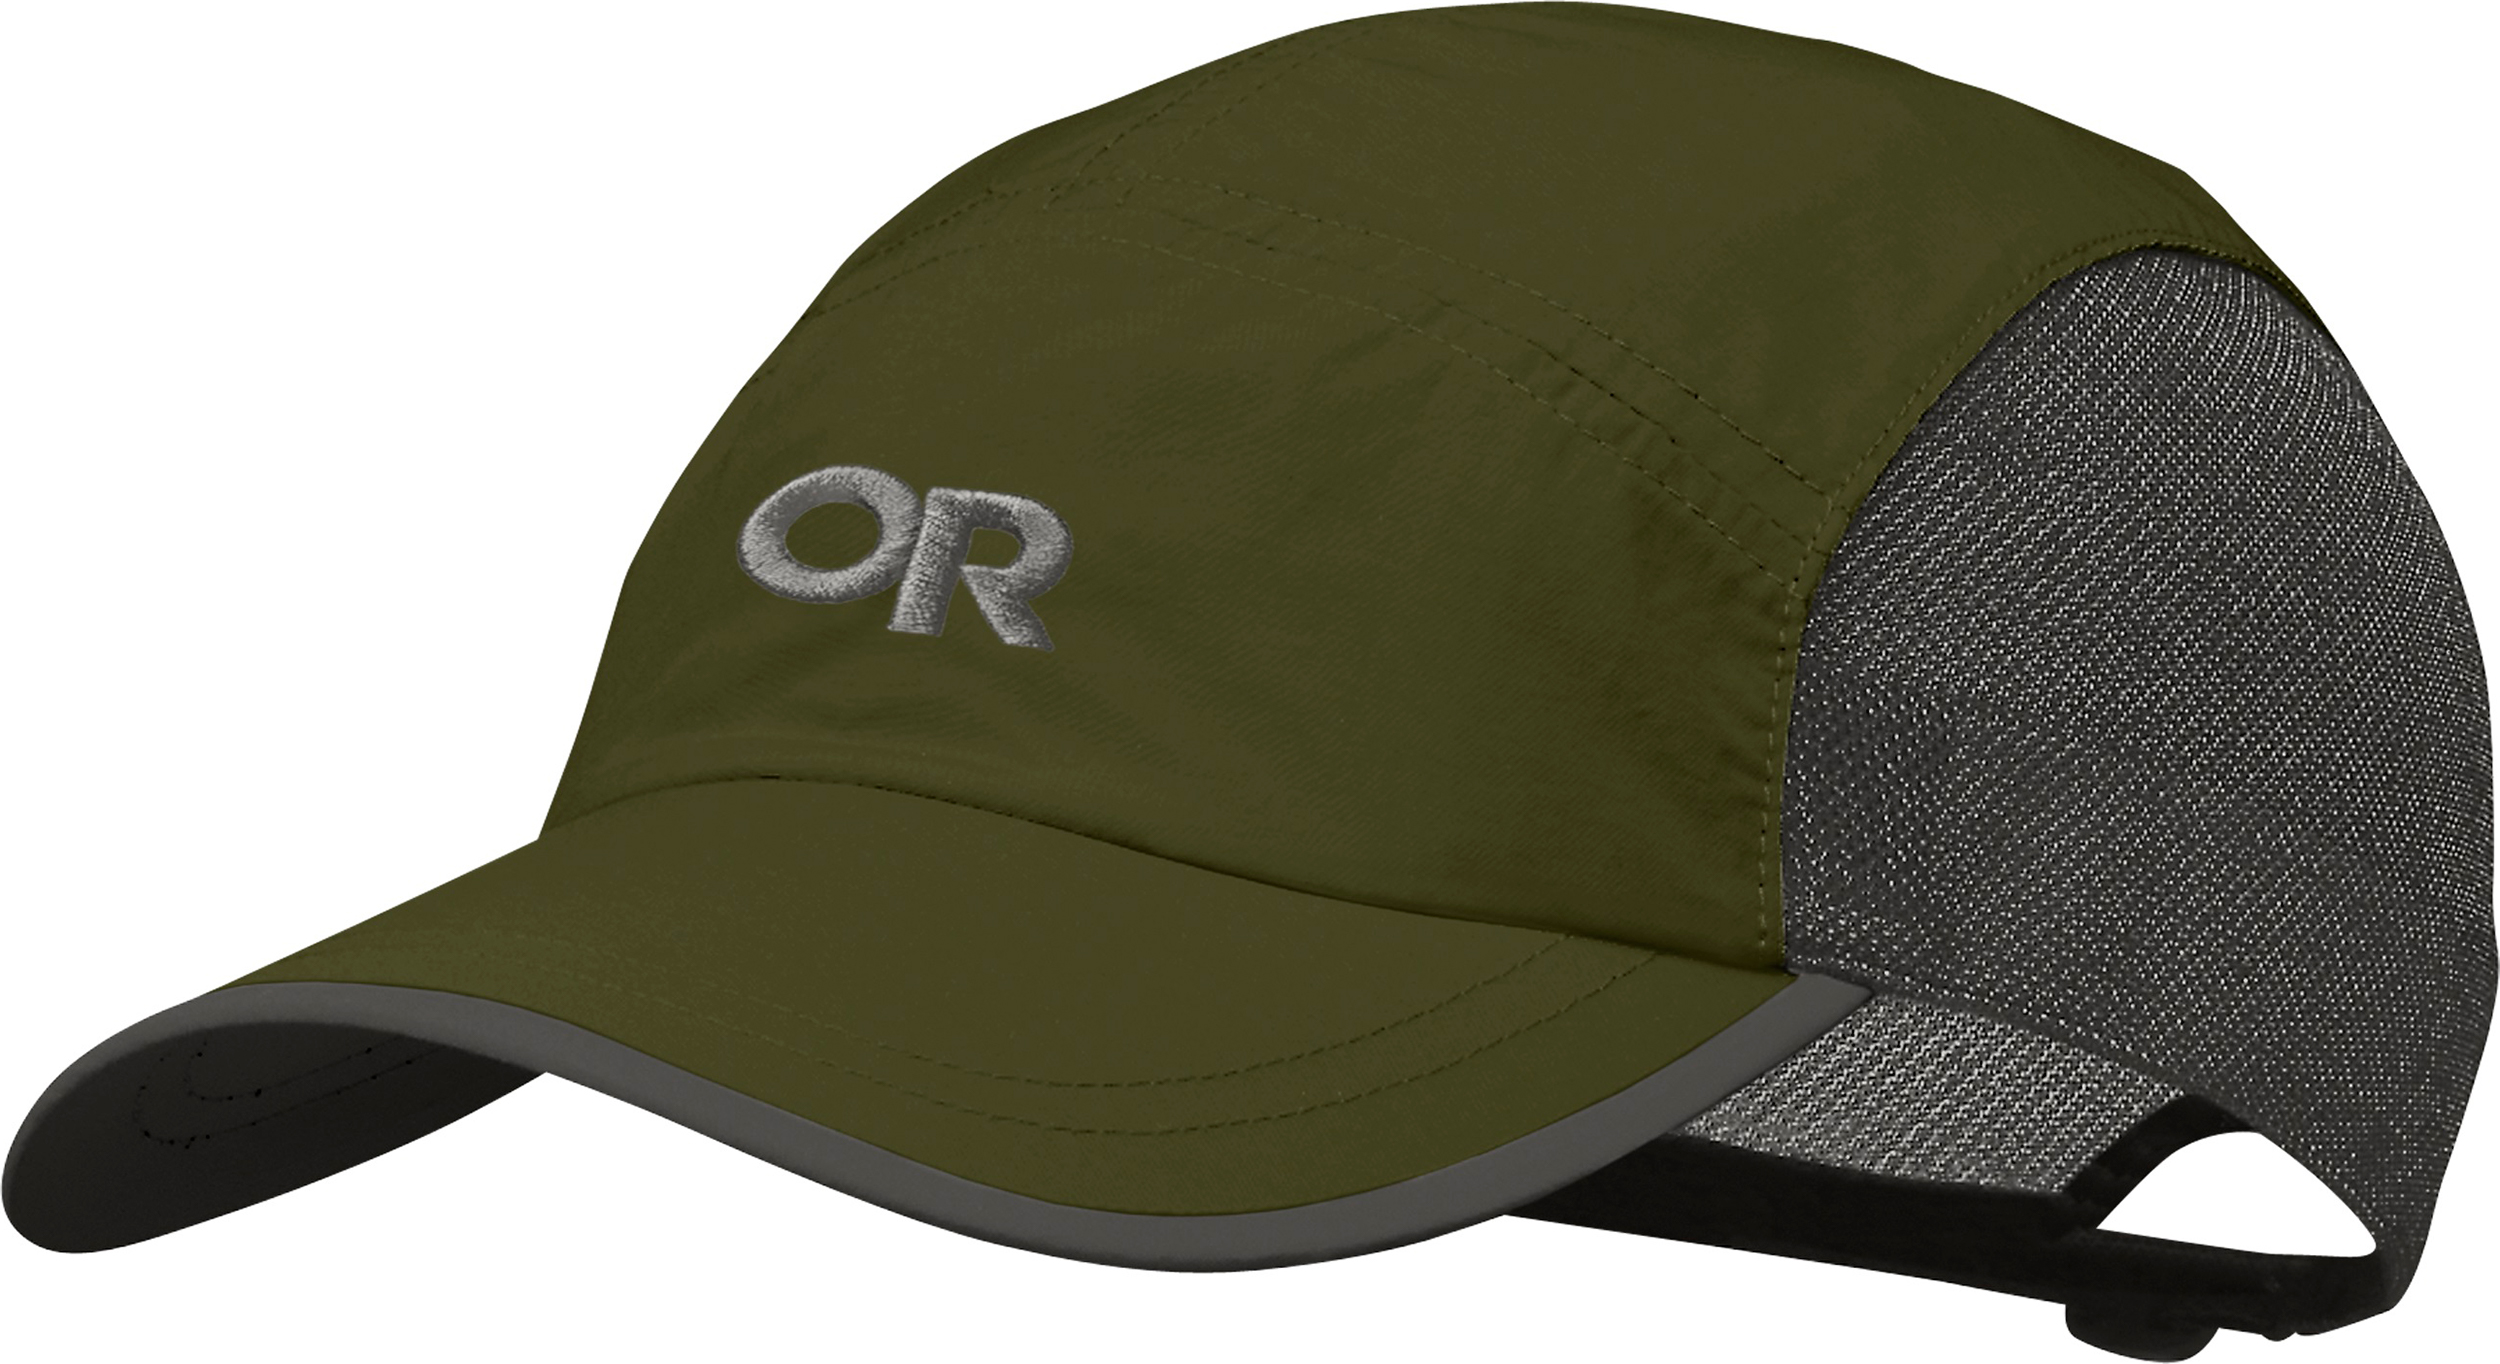 mec outdoor research hat - Online Exclusive Rate- OFF 64%